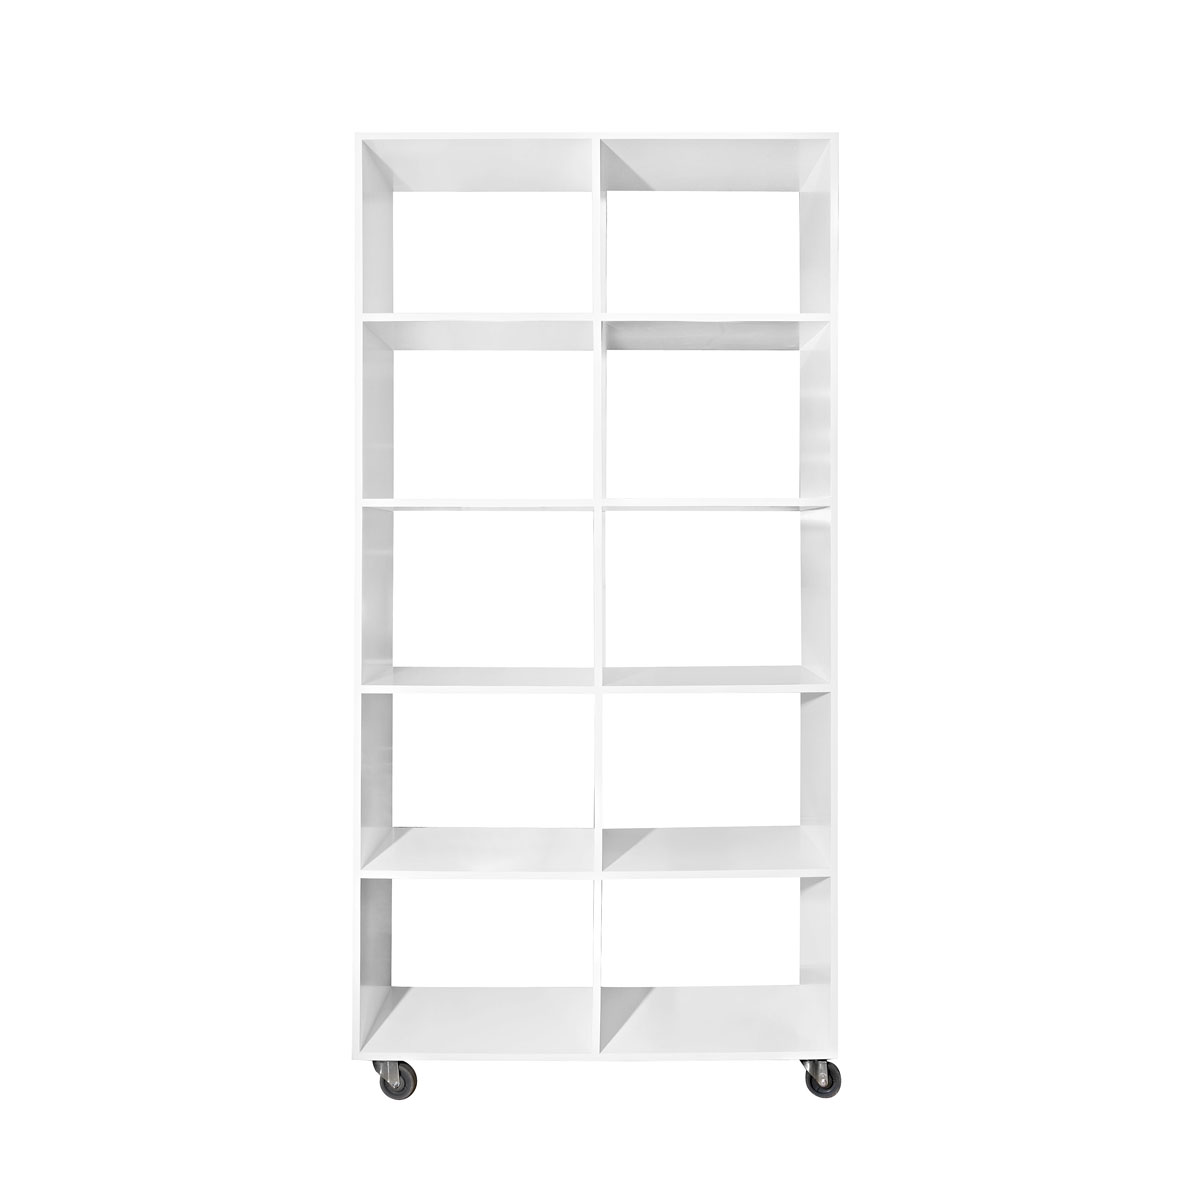 10 wide shelf unit